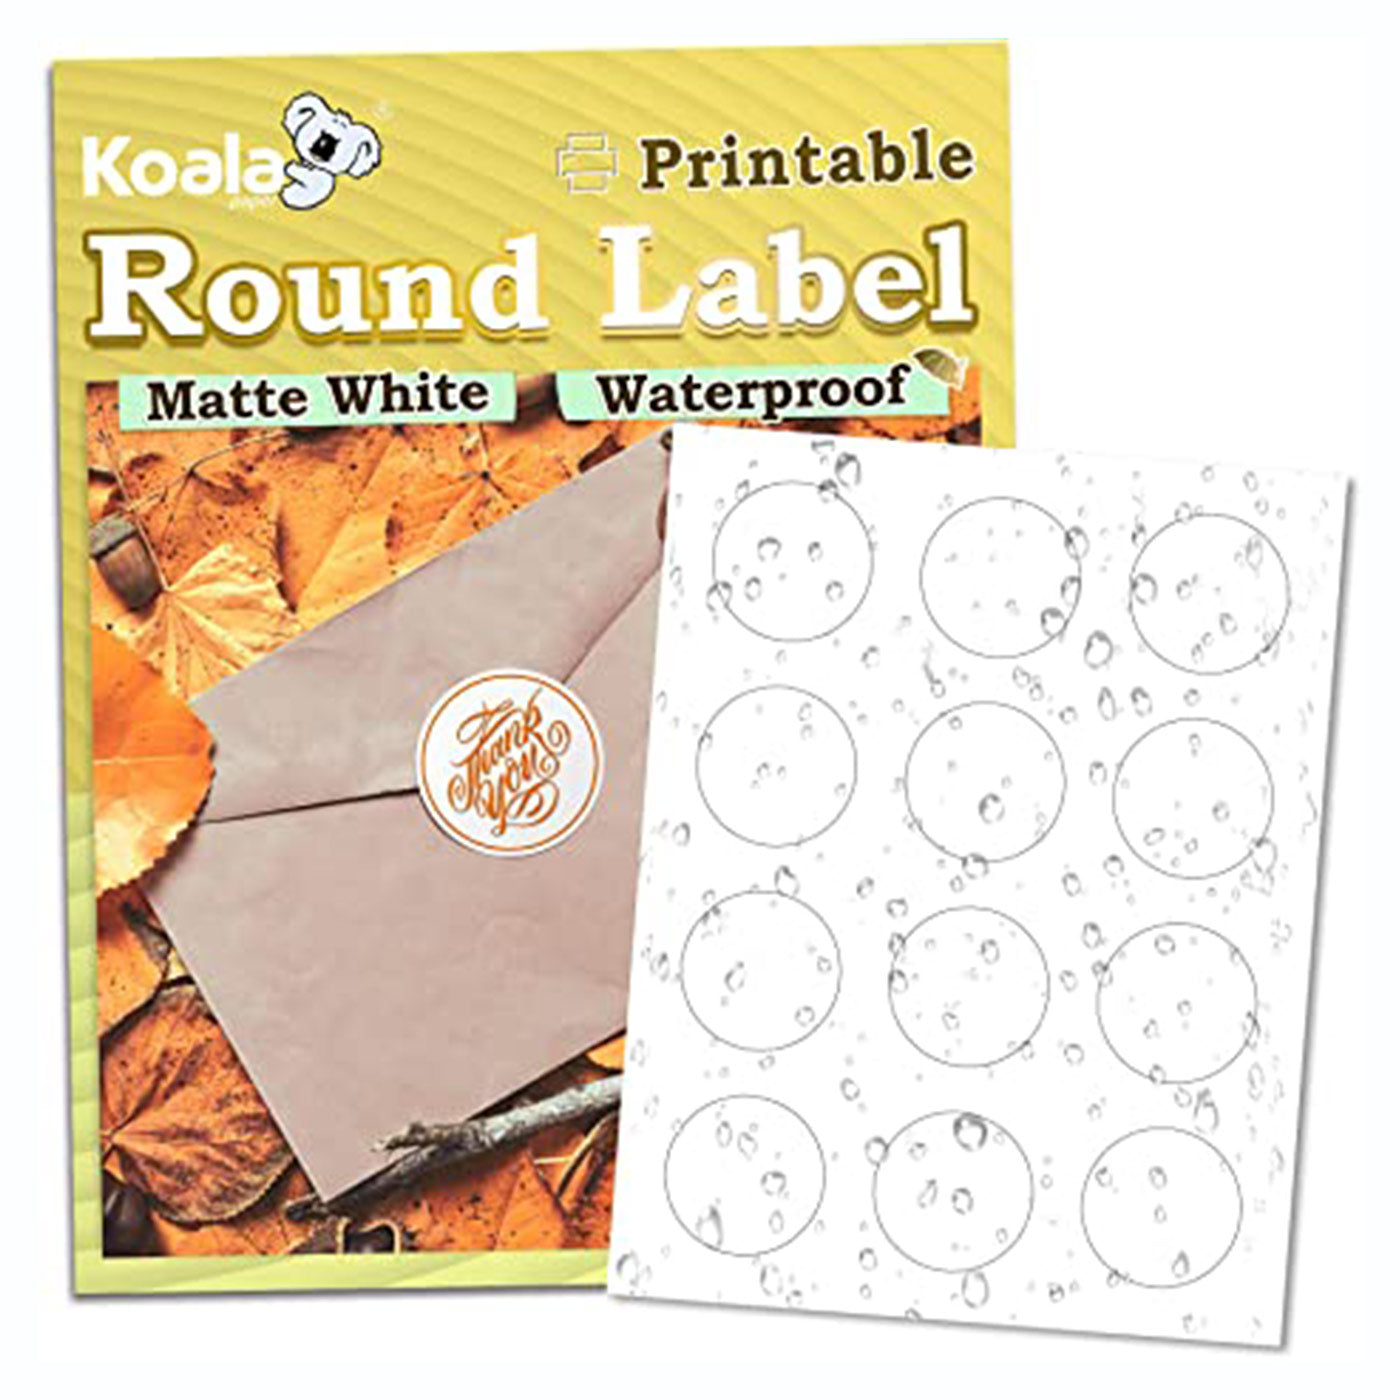 Koala Printable Vinyl Sticker Paper Waterproof Glossy White Laser Printer  ONLY Self-Adhesive Label 10 sheets 8.5 x 11 inch